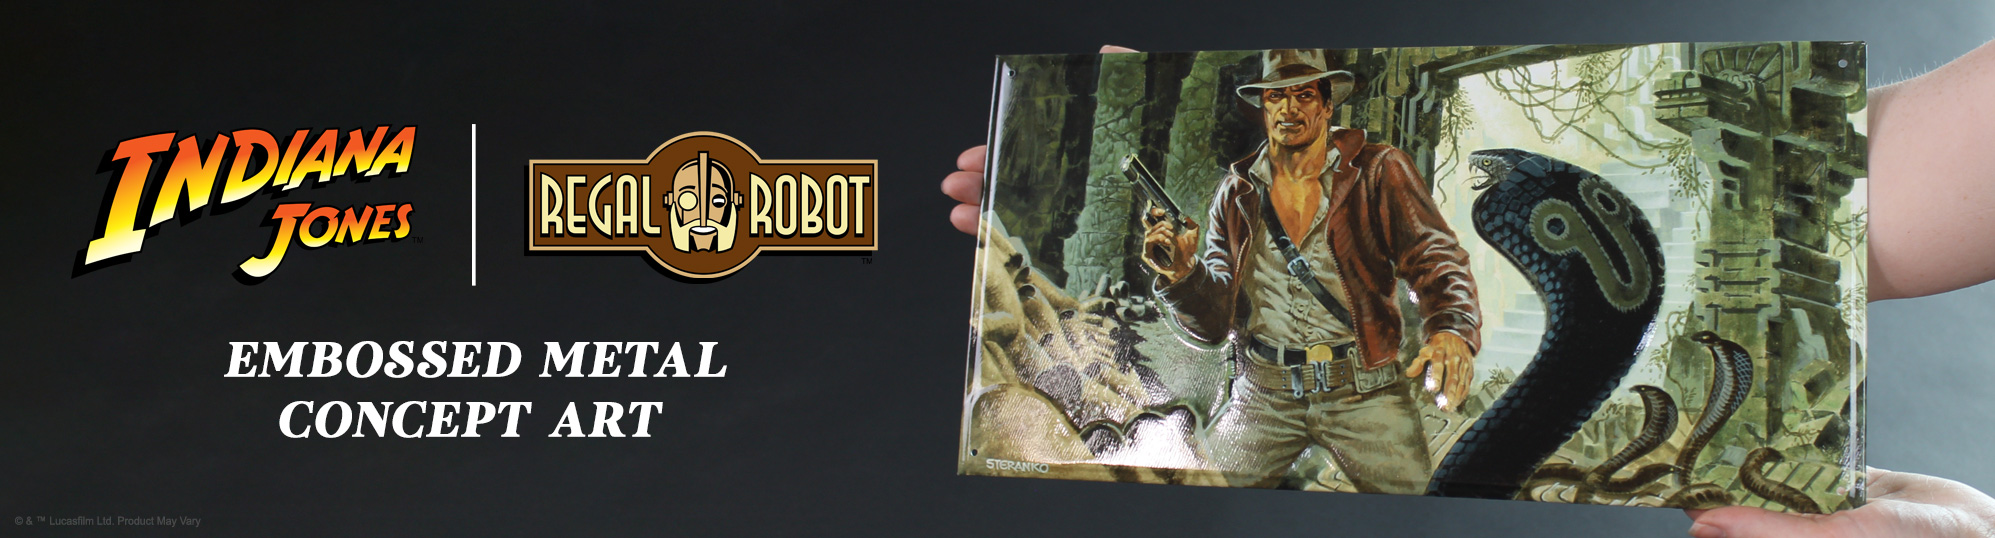 Jim Steranko concept art for Indiana Jones Raiders of the Lost Ark